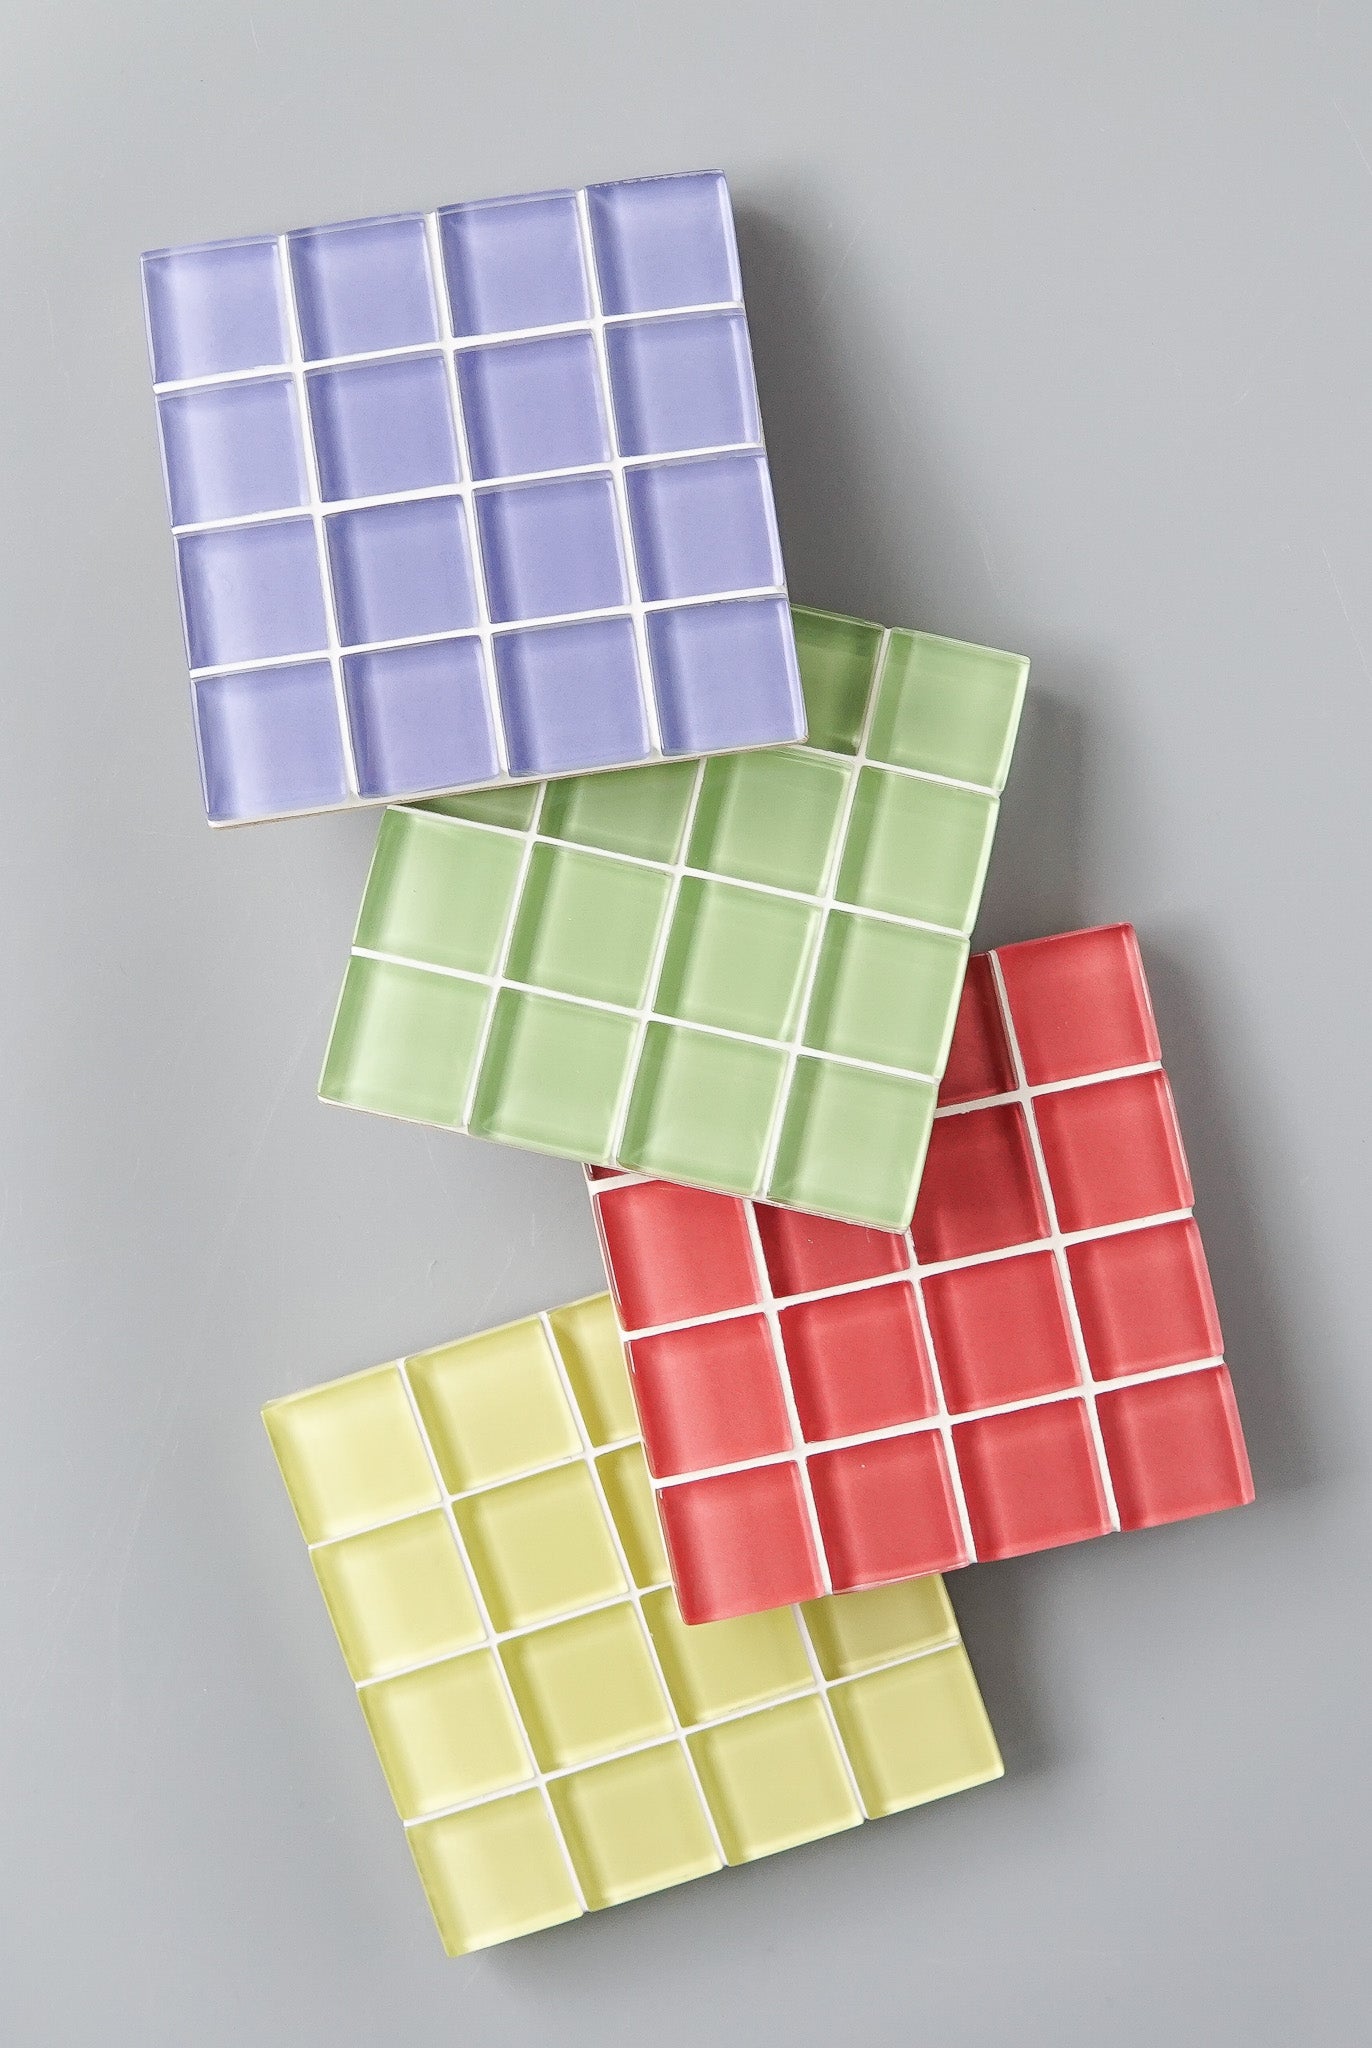 Subtle Art Studios: Solid Color Glass Tile Coaster